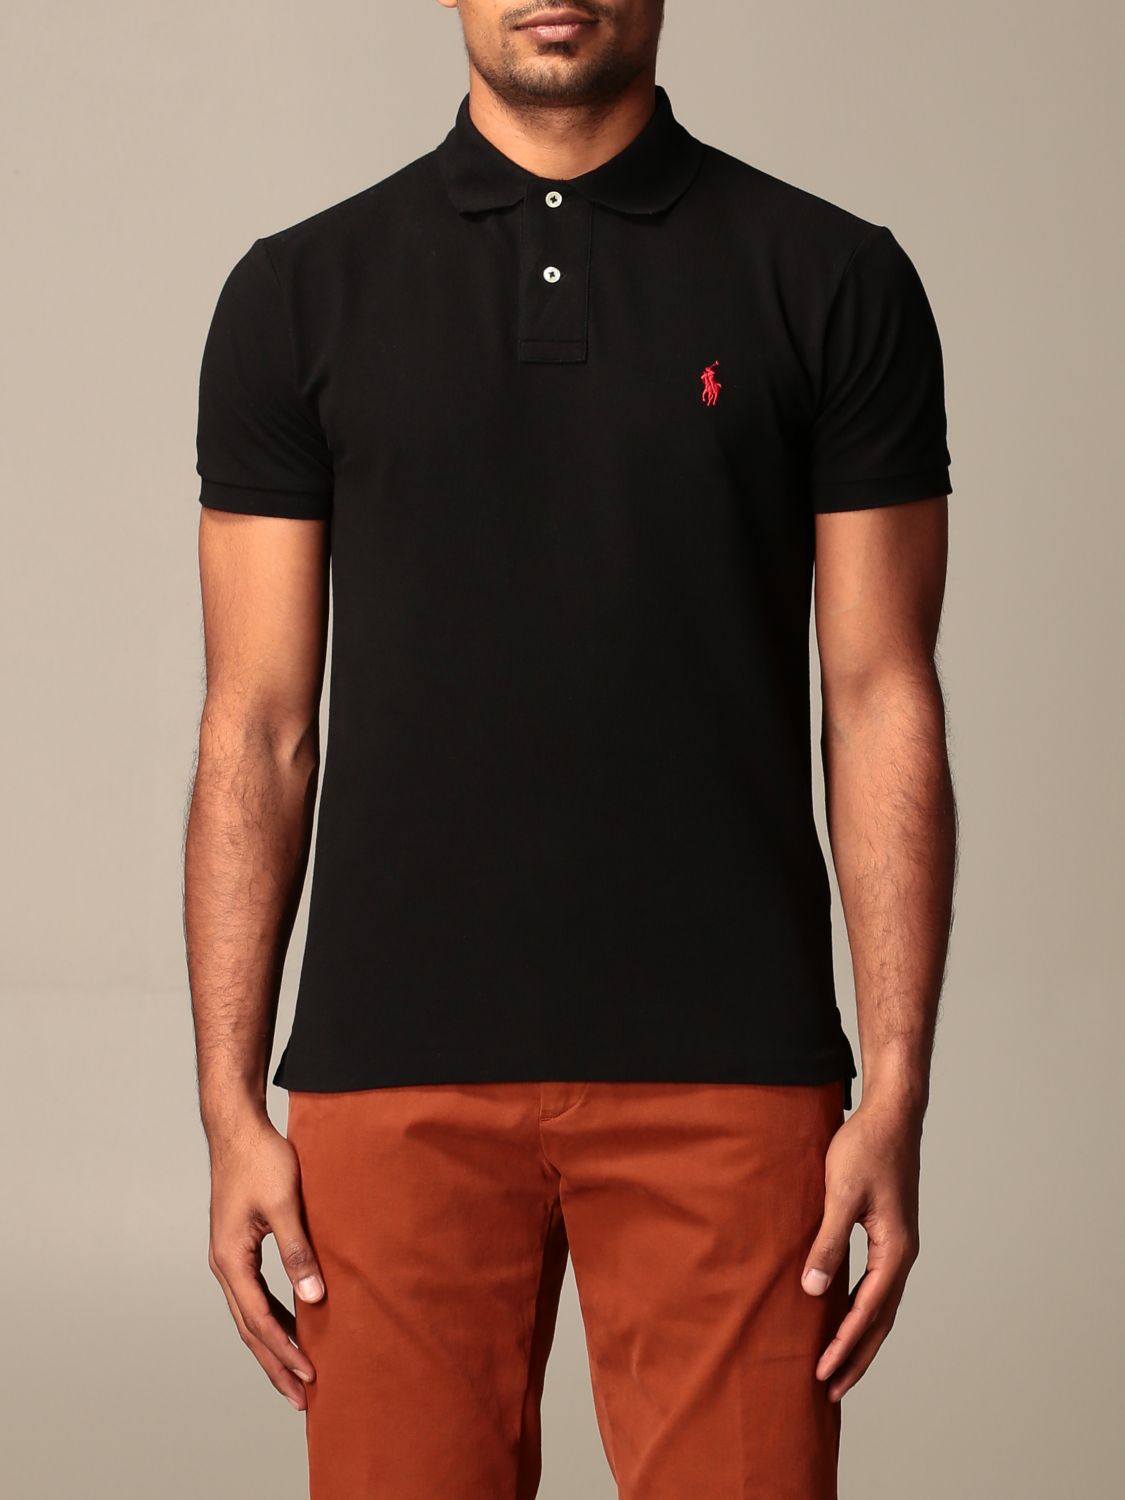 Cilia snap verzameling Polo Ralph Lauren Outlet: short-sleeved polo shirt - Black | Polo Ralph  Lauren polo shirt 710795080 online on GIGLIO.COM